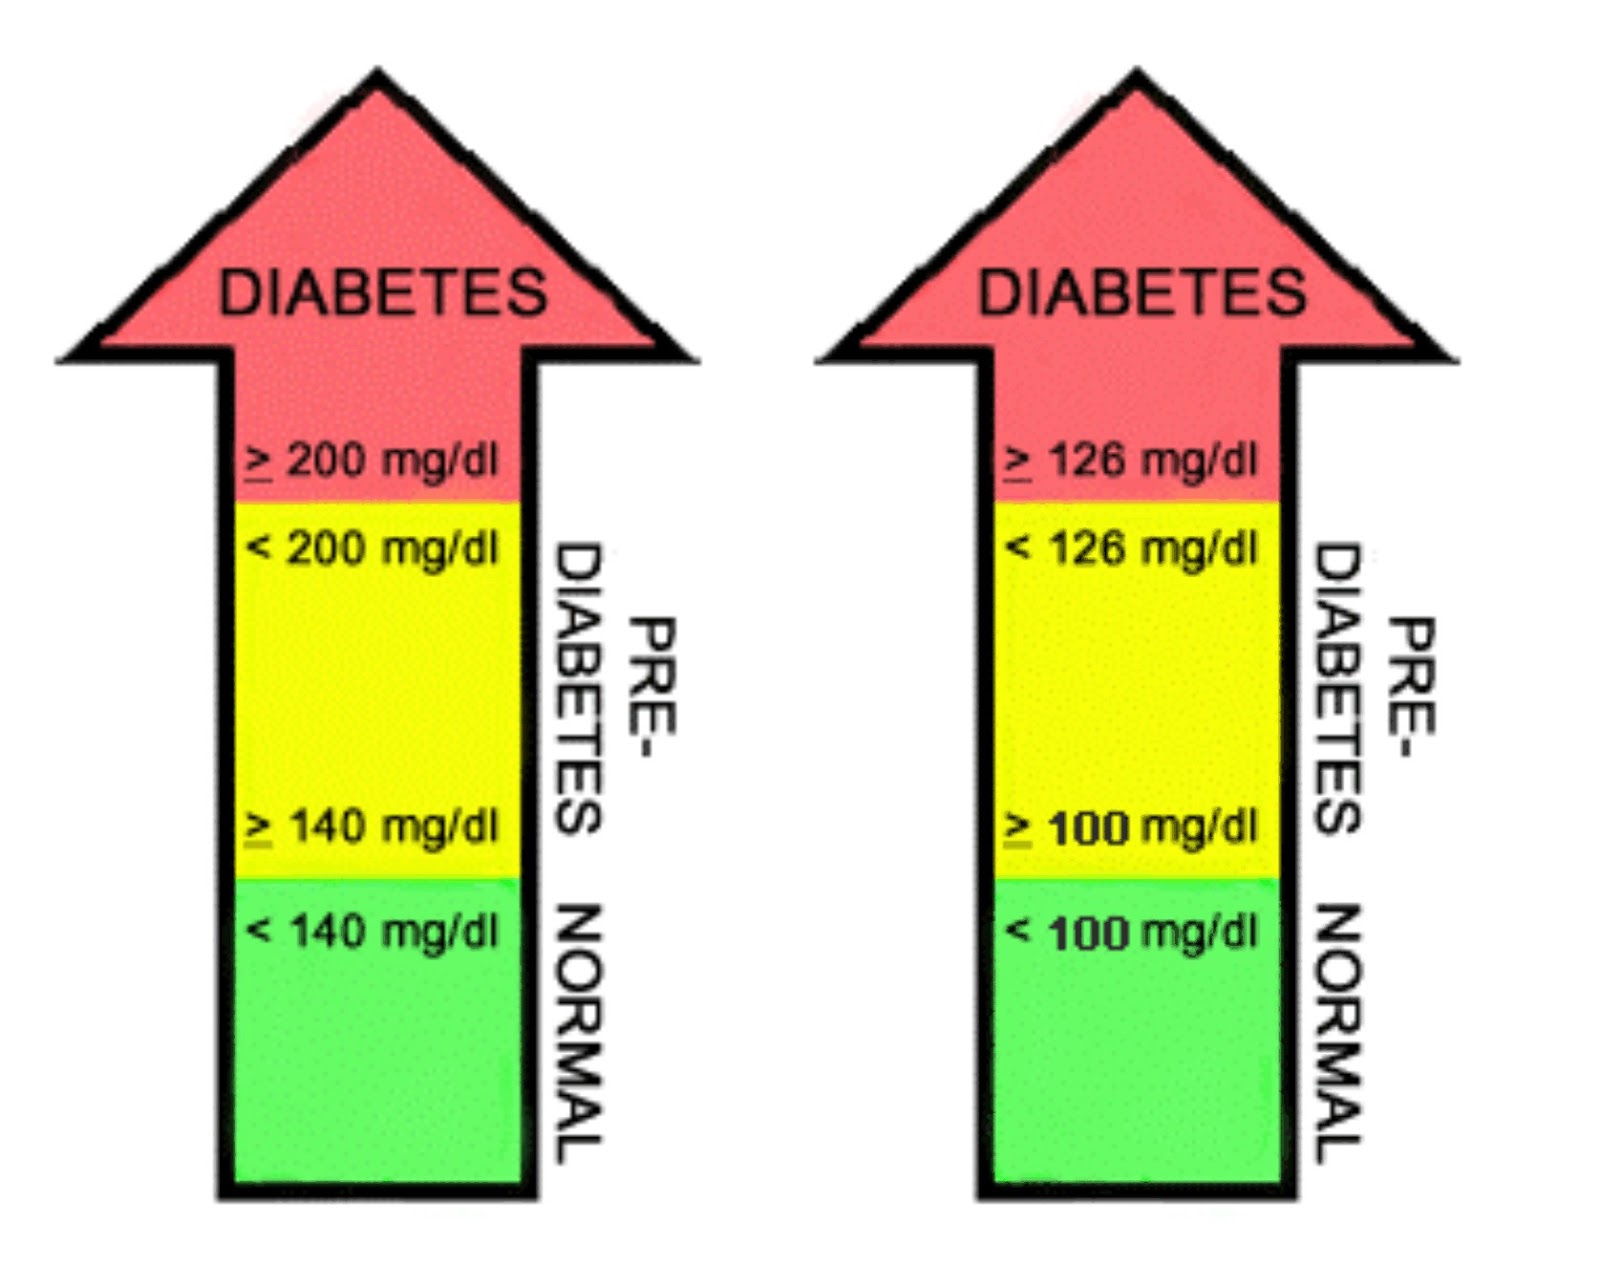 * JOURNAL OF LIFE *: 4 JUTA RAKYAT MALAYSIA BERUSIA >18 TAHUN ADALAH” src=”https://4.bp.blogspot.com/-VKNPokaslQk/VB-r919OnaI/AAAAAAAADkg/lcW0Rhs4hNA/s1600/diabetes.png” width=”100%” onerror=”this.onerror=null;this.src=’https://tse1.mm.bing.net/th?id=OIP.lP1tIFbinavZndJZjeh8GQAAAA&pid=15.1′;” /></p>
<p>    <small>norafesa.blogspot.com</small></p>
<p>penghidap berusia</p>
<h2>Perawatan Luka Pekanbaru: Diabetic Info</h2>
<p>    <img decoding=